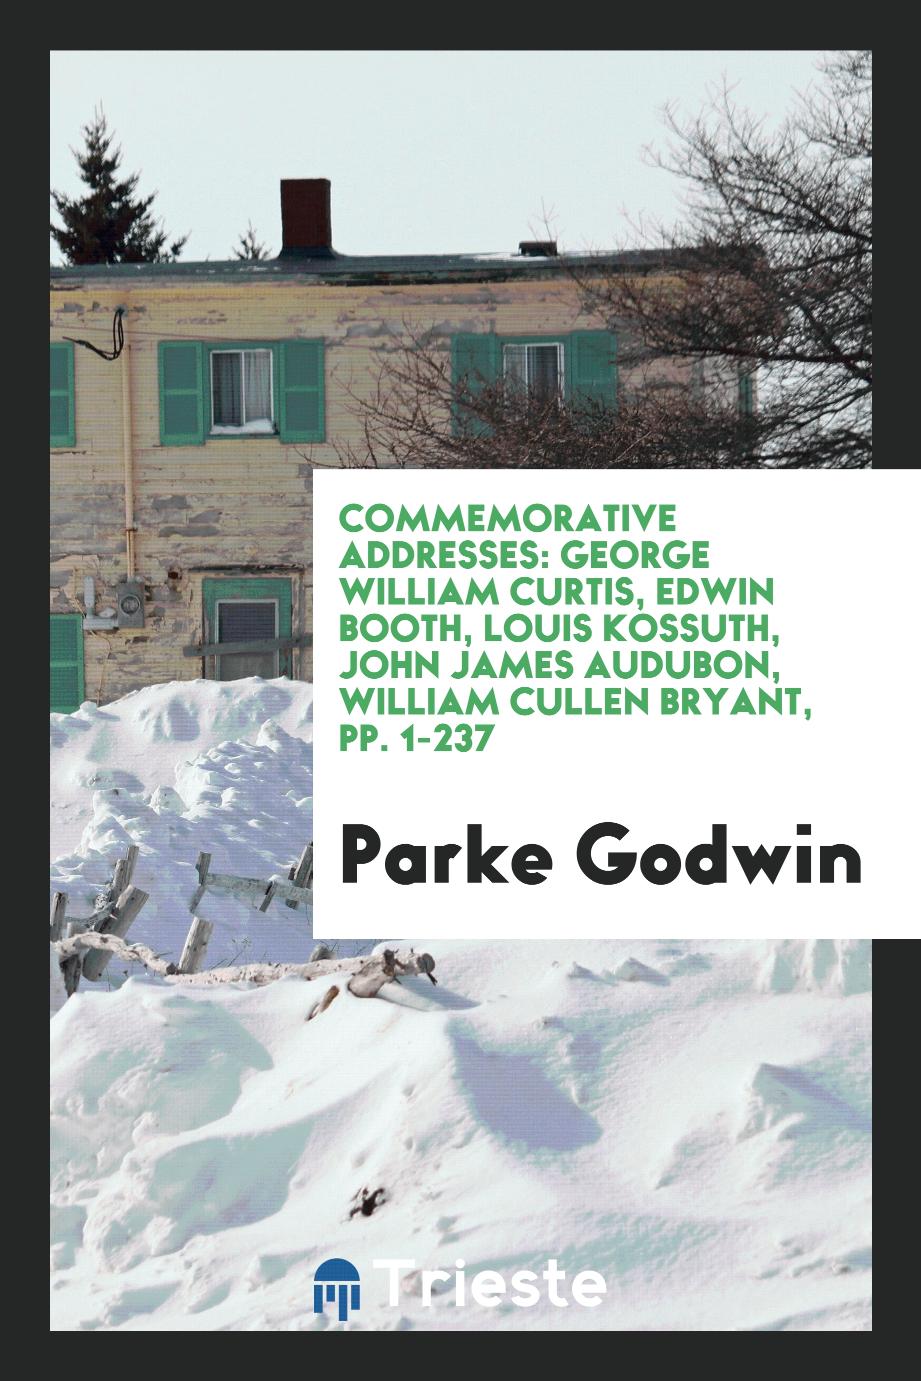 Parke Godwin - Commemorative Addresses: George William Curtis, Edwin Booth, Louis Kossuth, John James Audubon, William Cullen Bryant, pp. 1-237